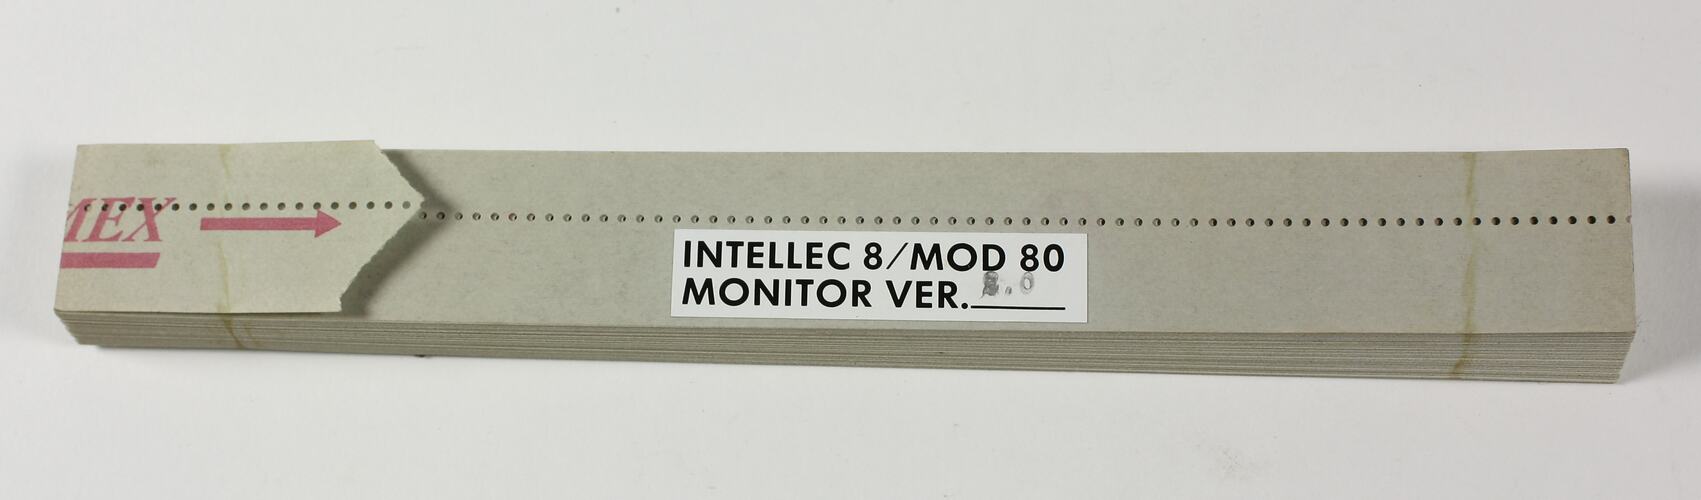 Paper Tape - Intellec 8 MOD 80, Monitor